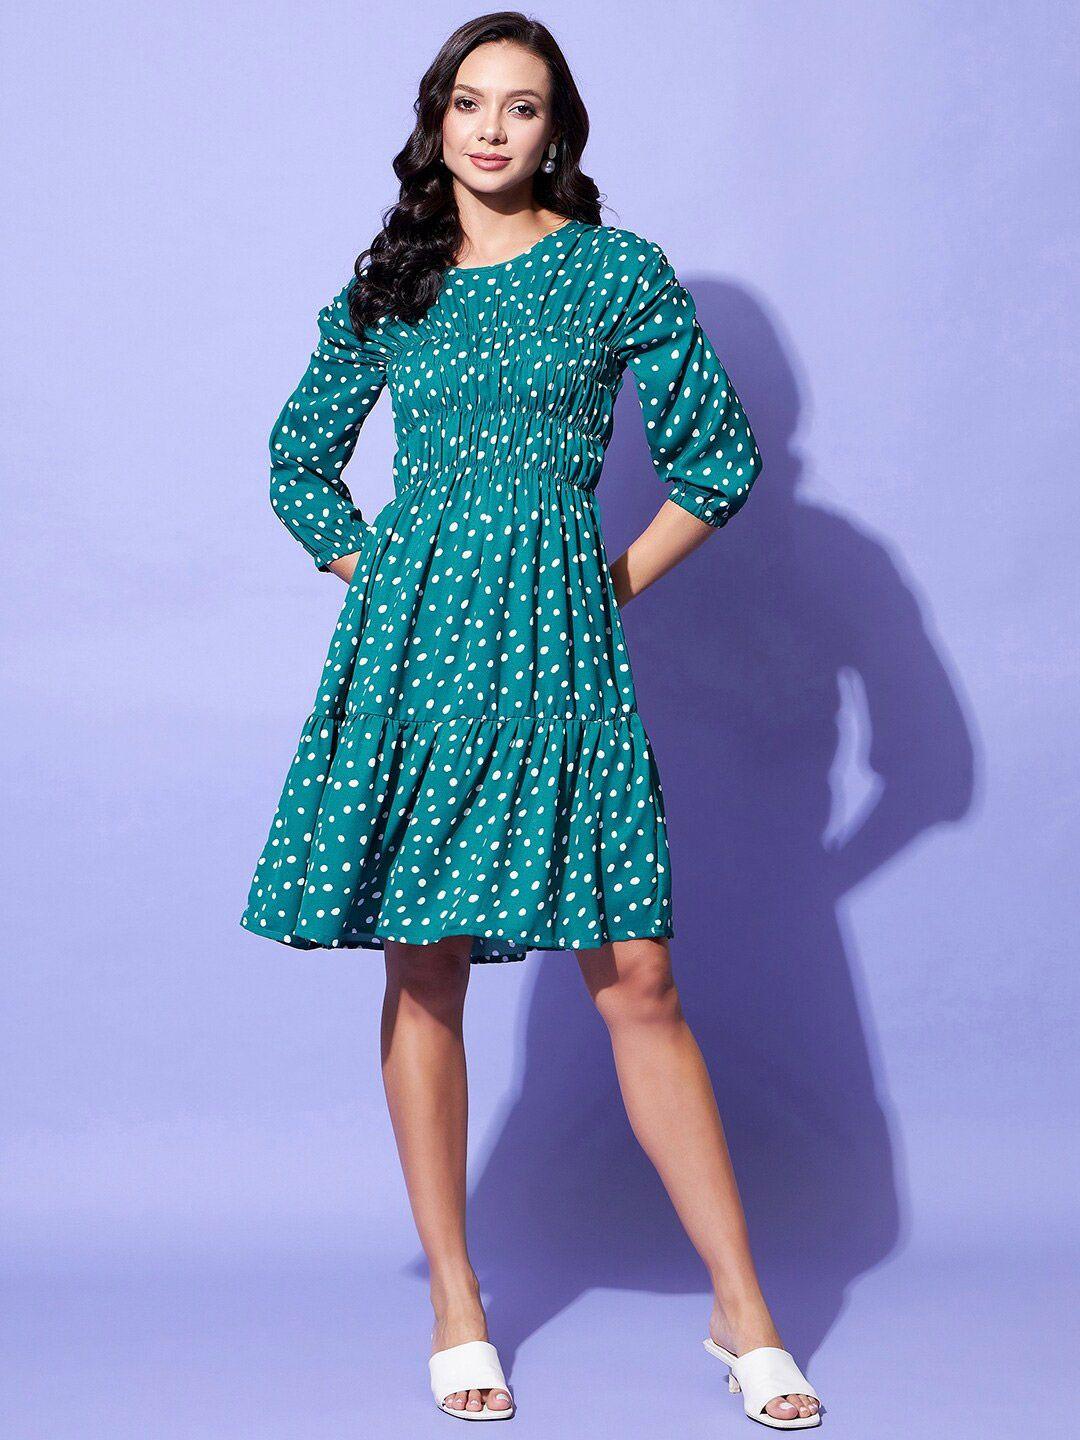 stylestone polka dots printed smocked fit & flare dress